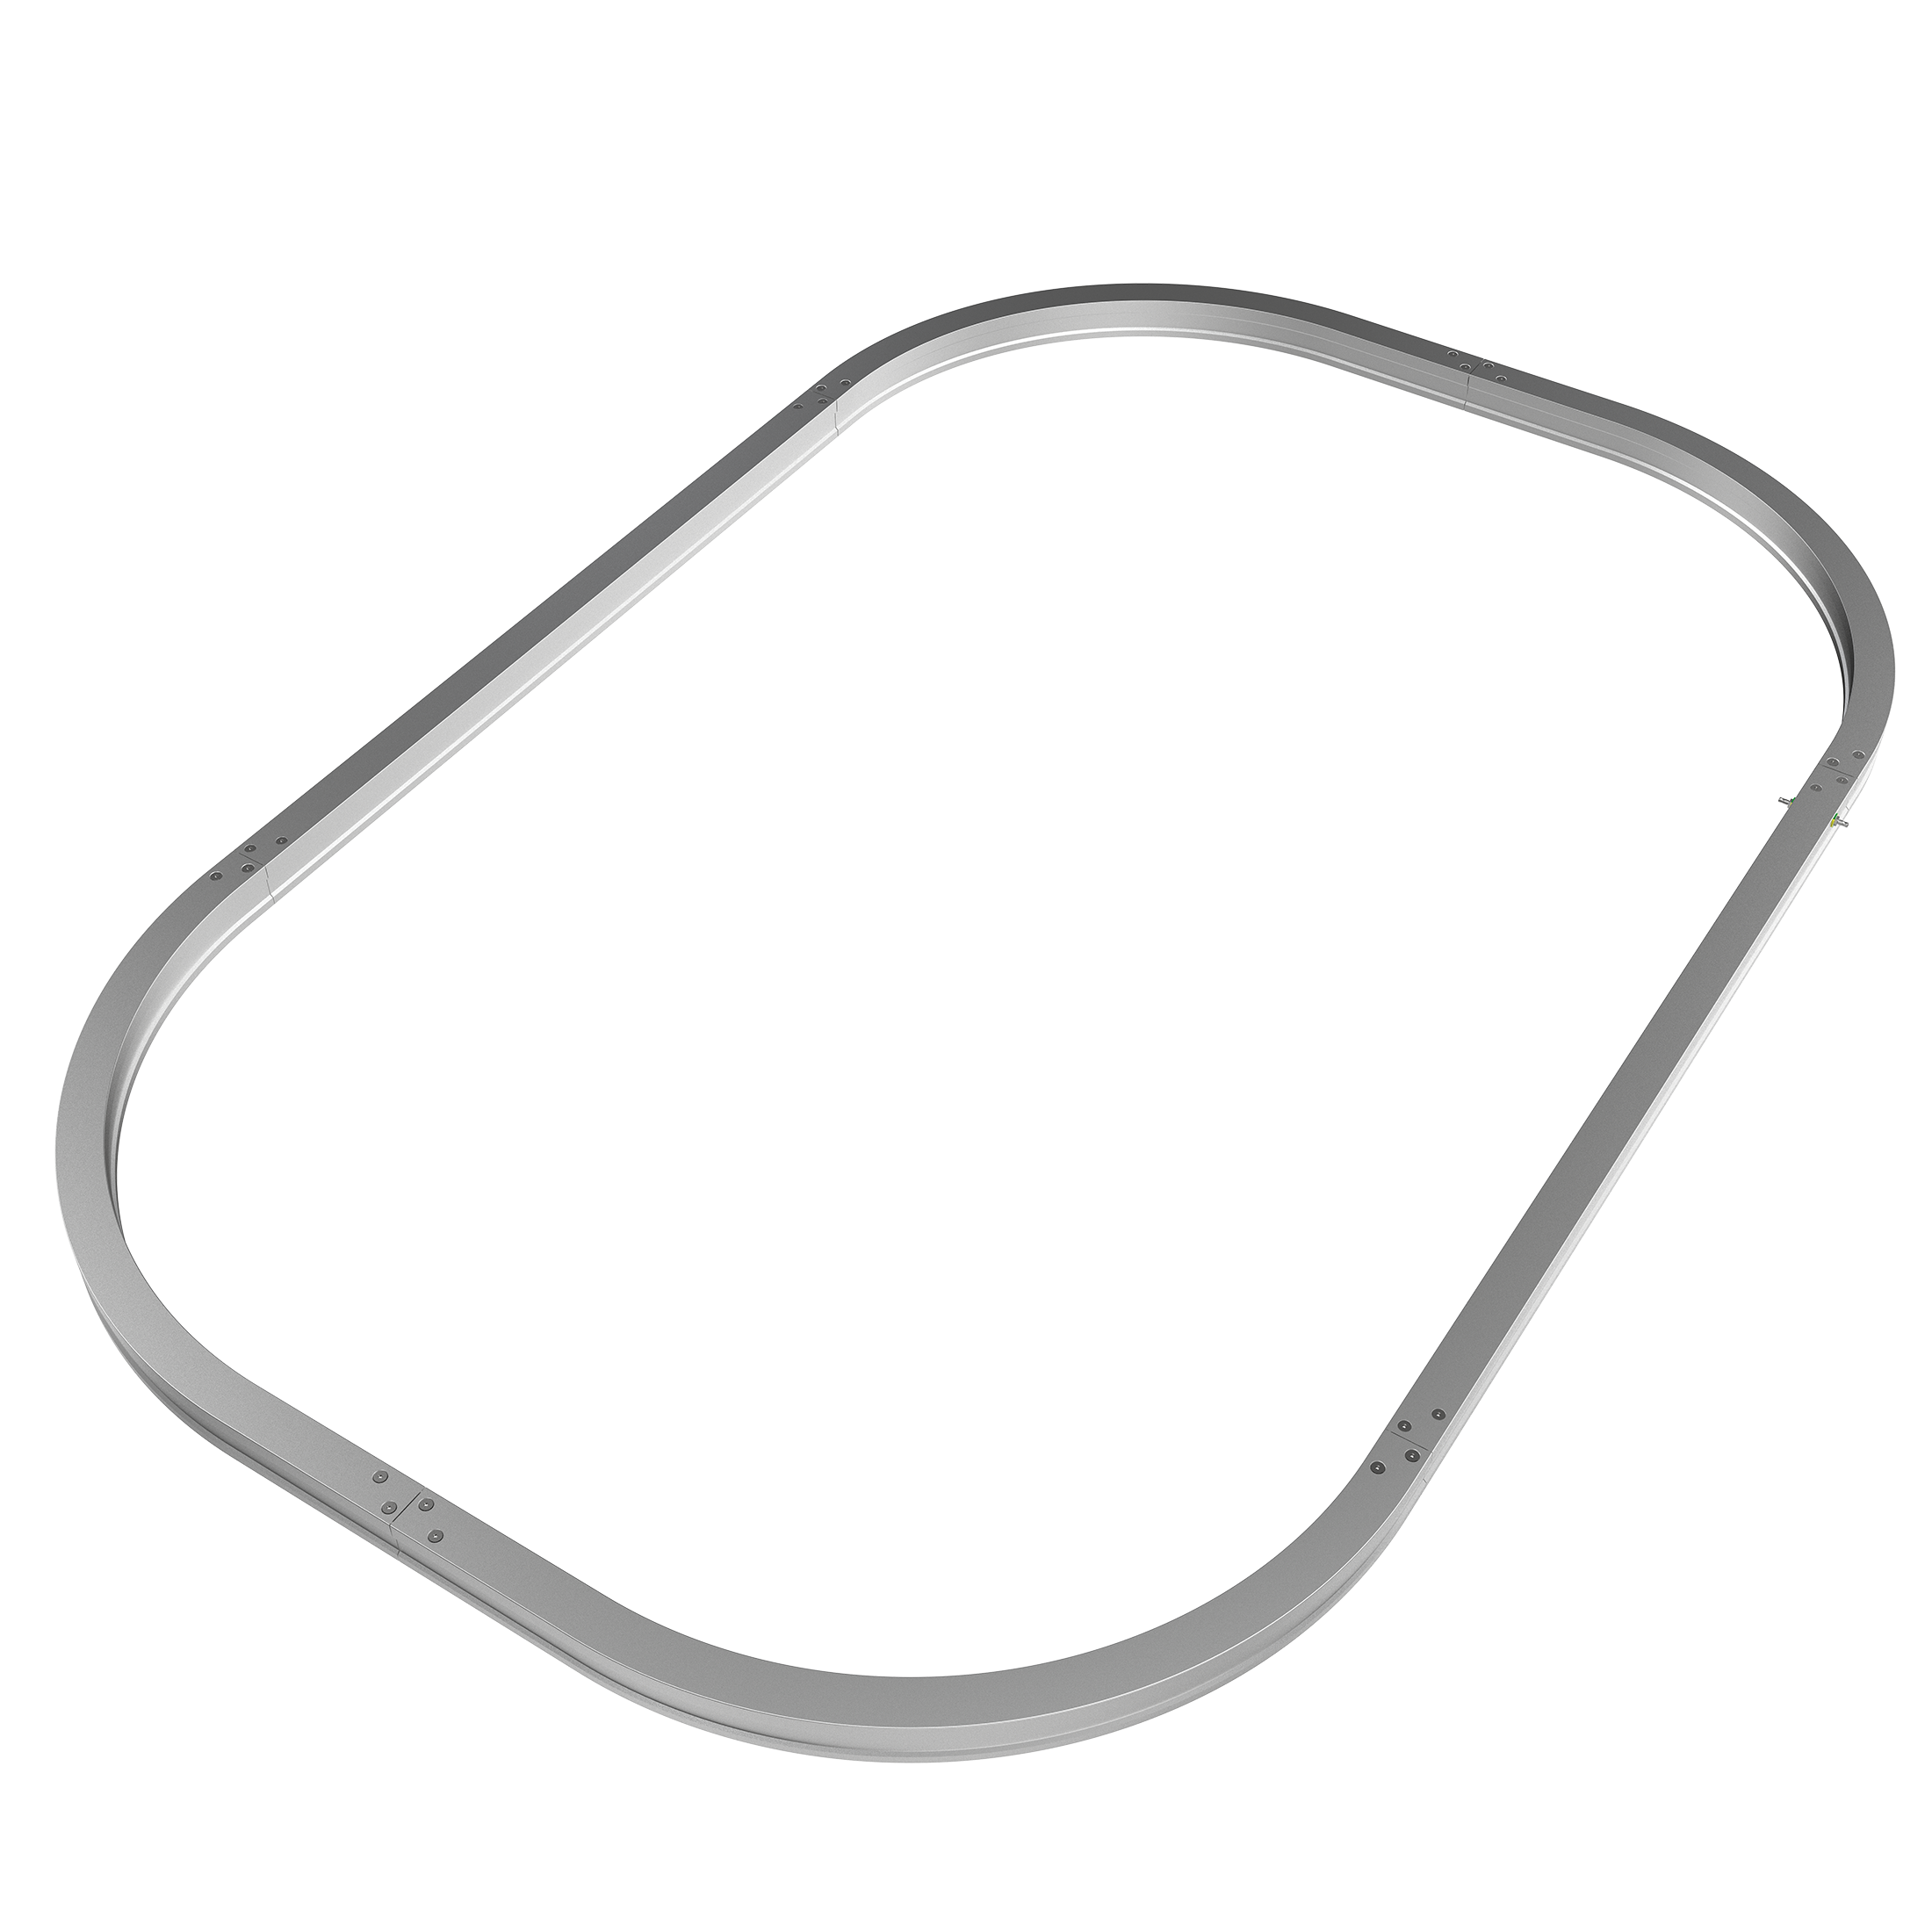 ICS 2 O-shape track system